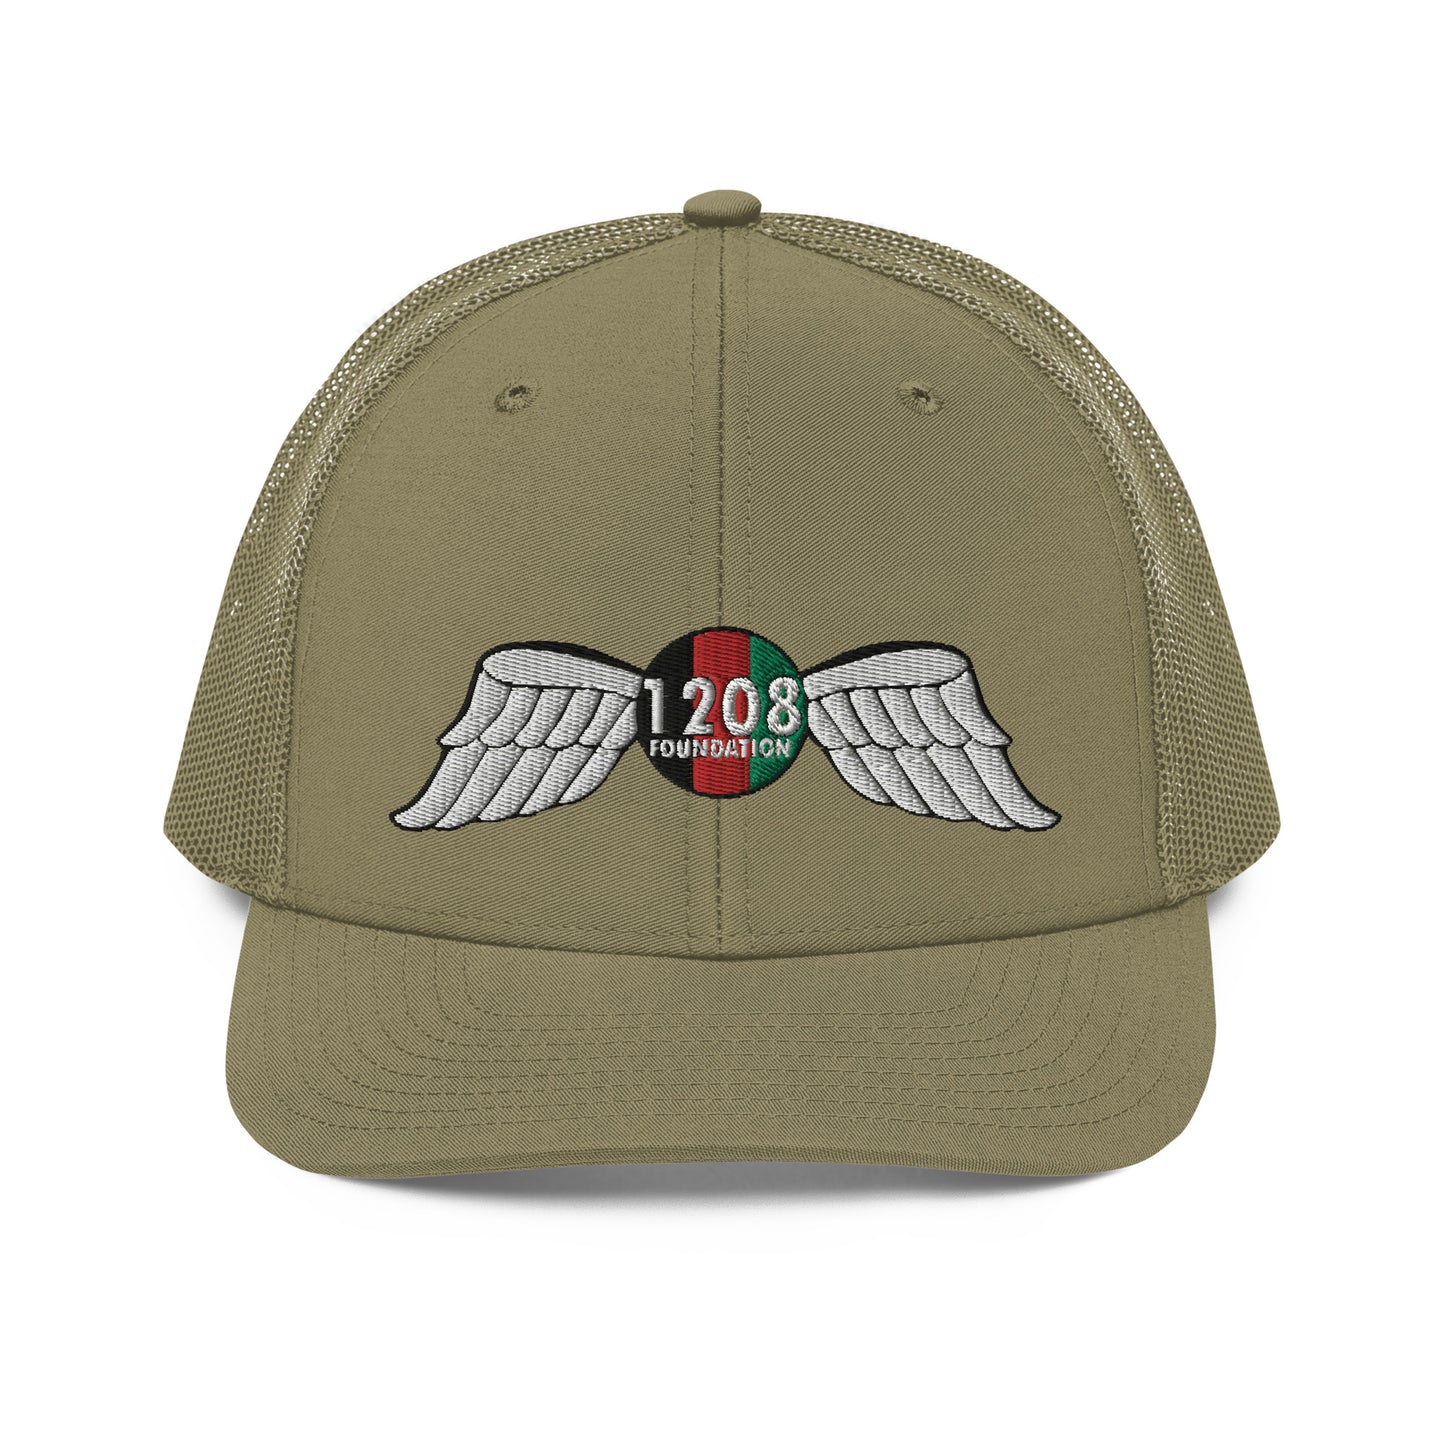 1208 Foundation | Snapback Hat